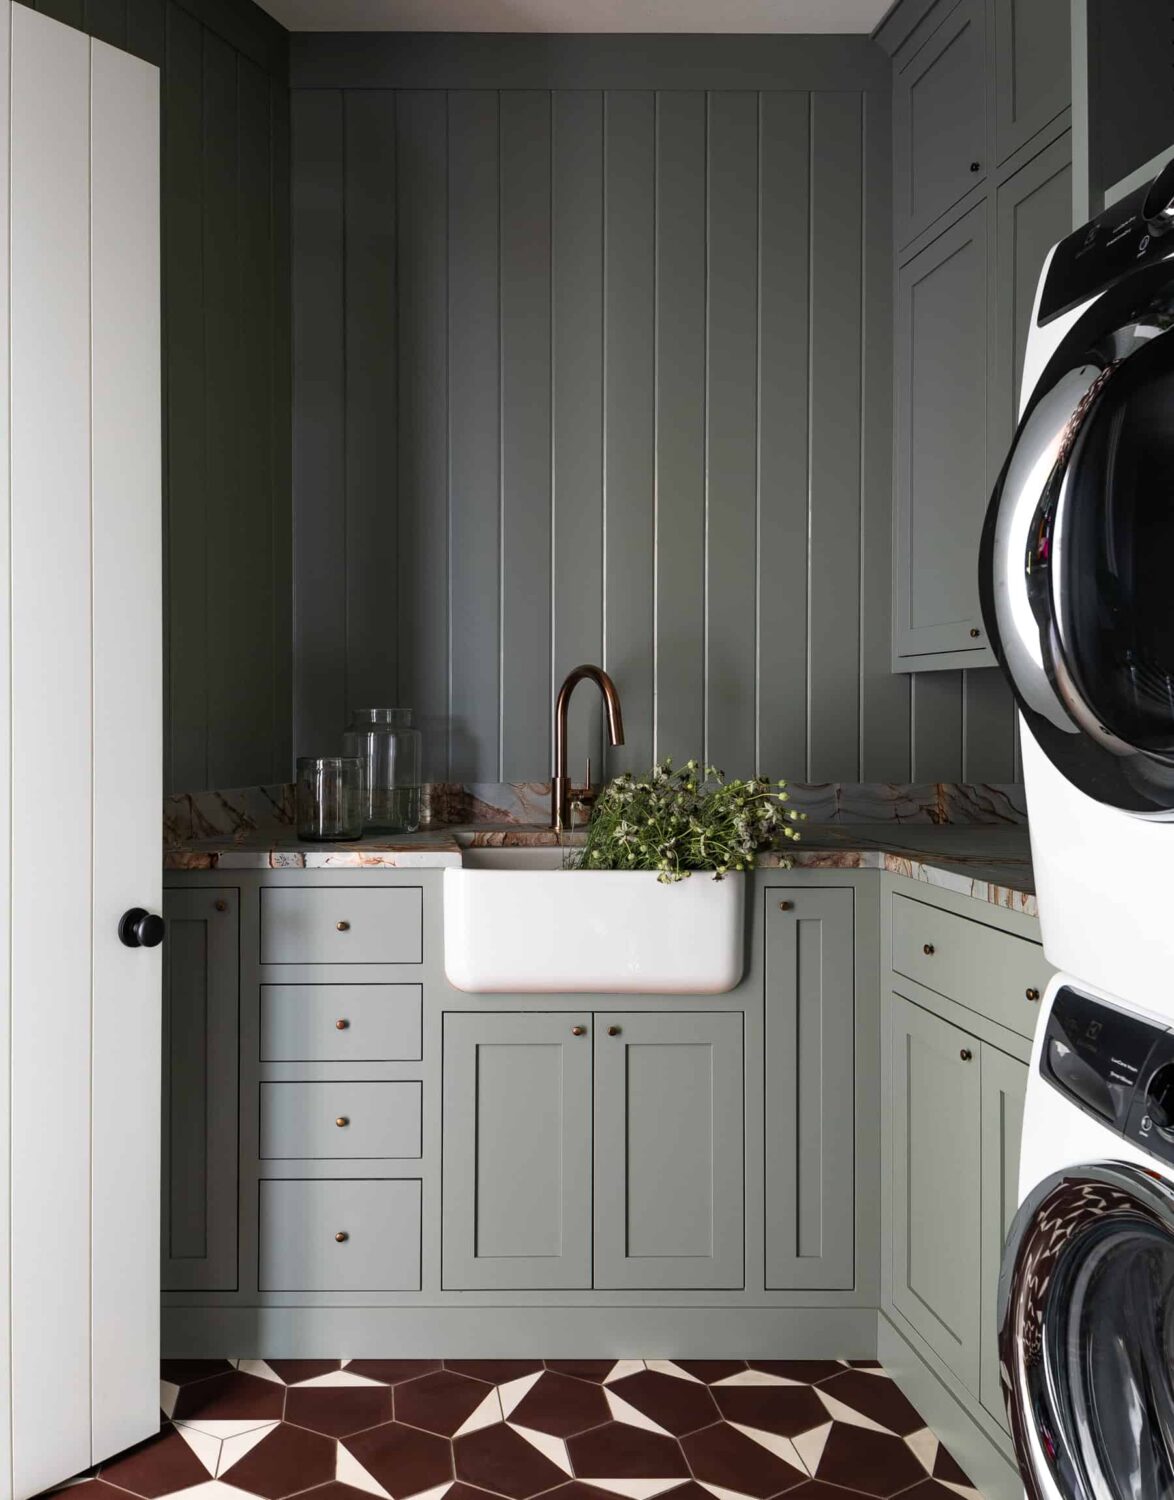 Heidi-Caillier-Design-luxury-interior-designer-laundry-room-patterned-tile